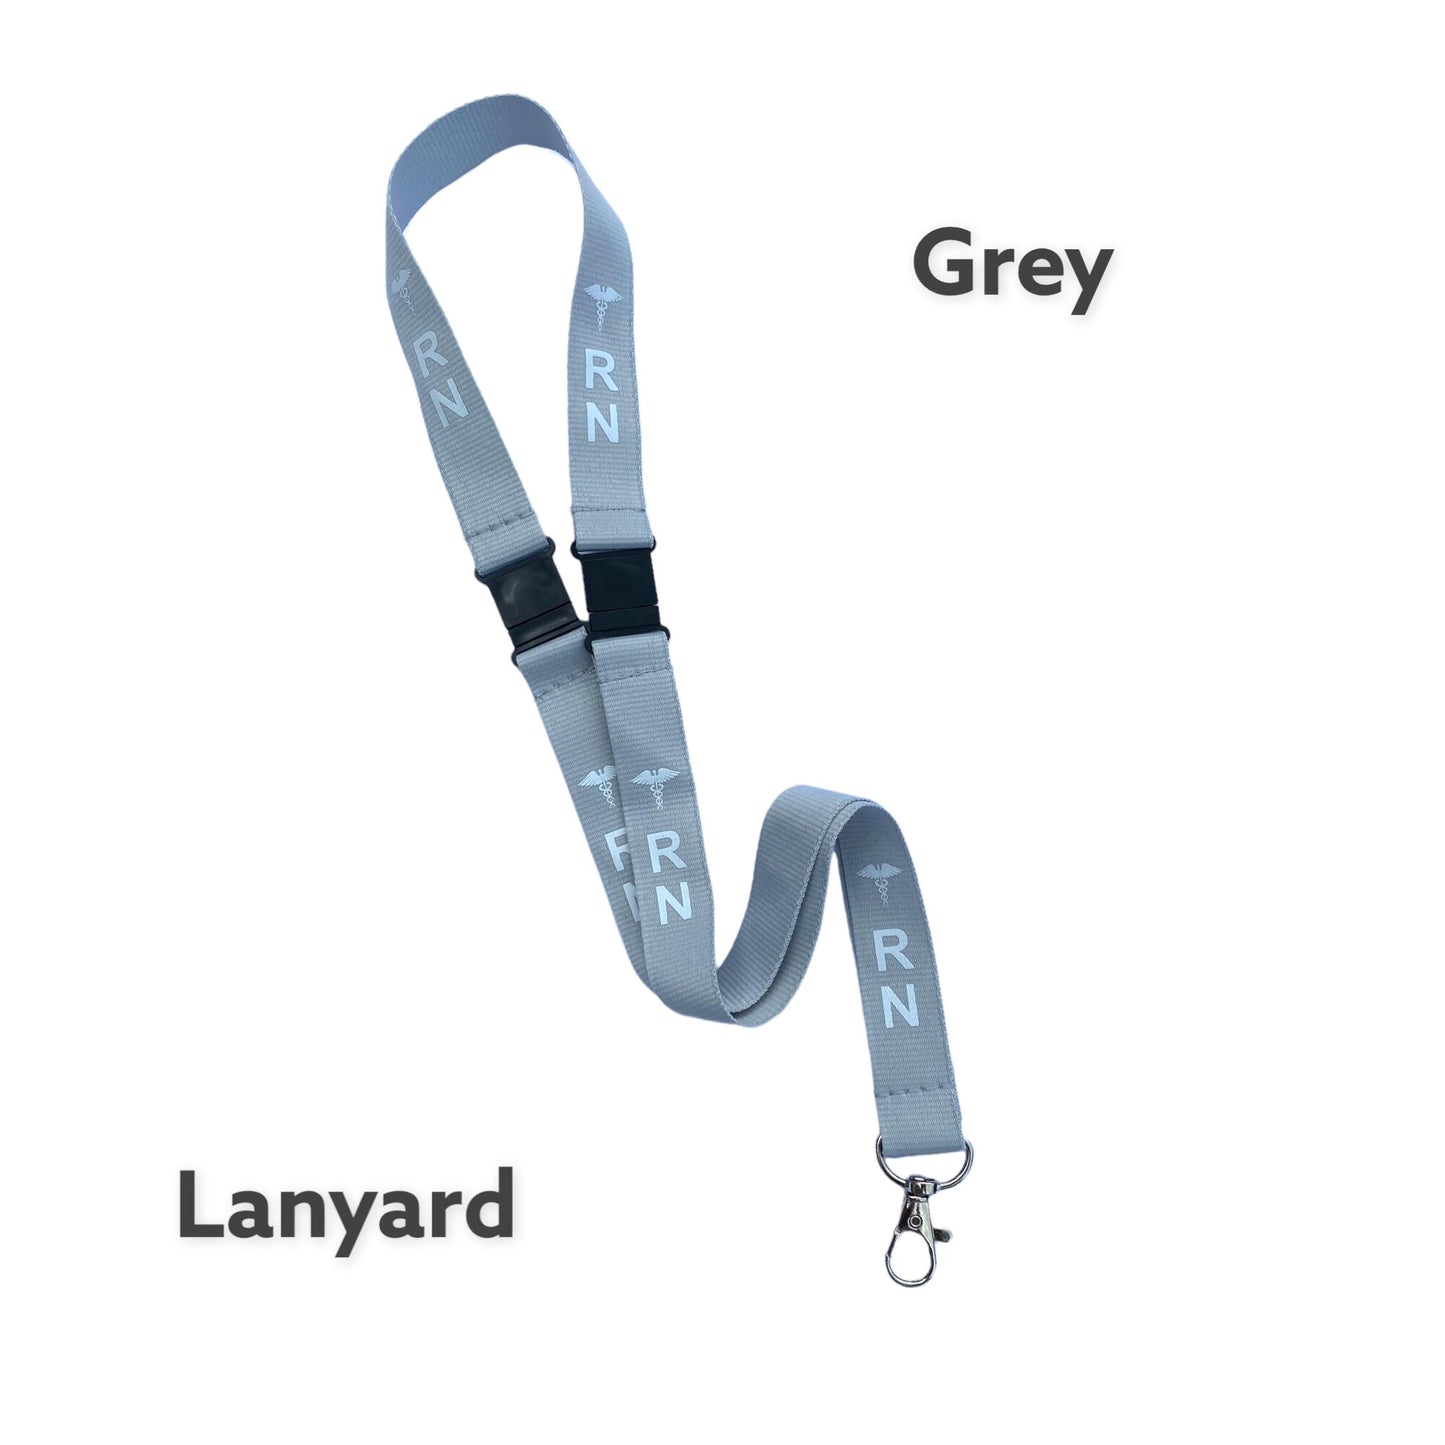 GREY RN LANYARD, Badge holder, key holder with 2 breakaways, Nurse Gift